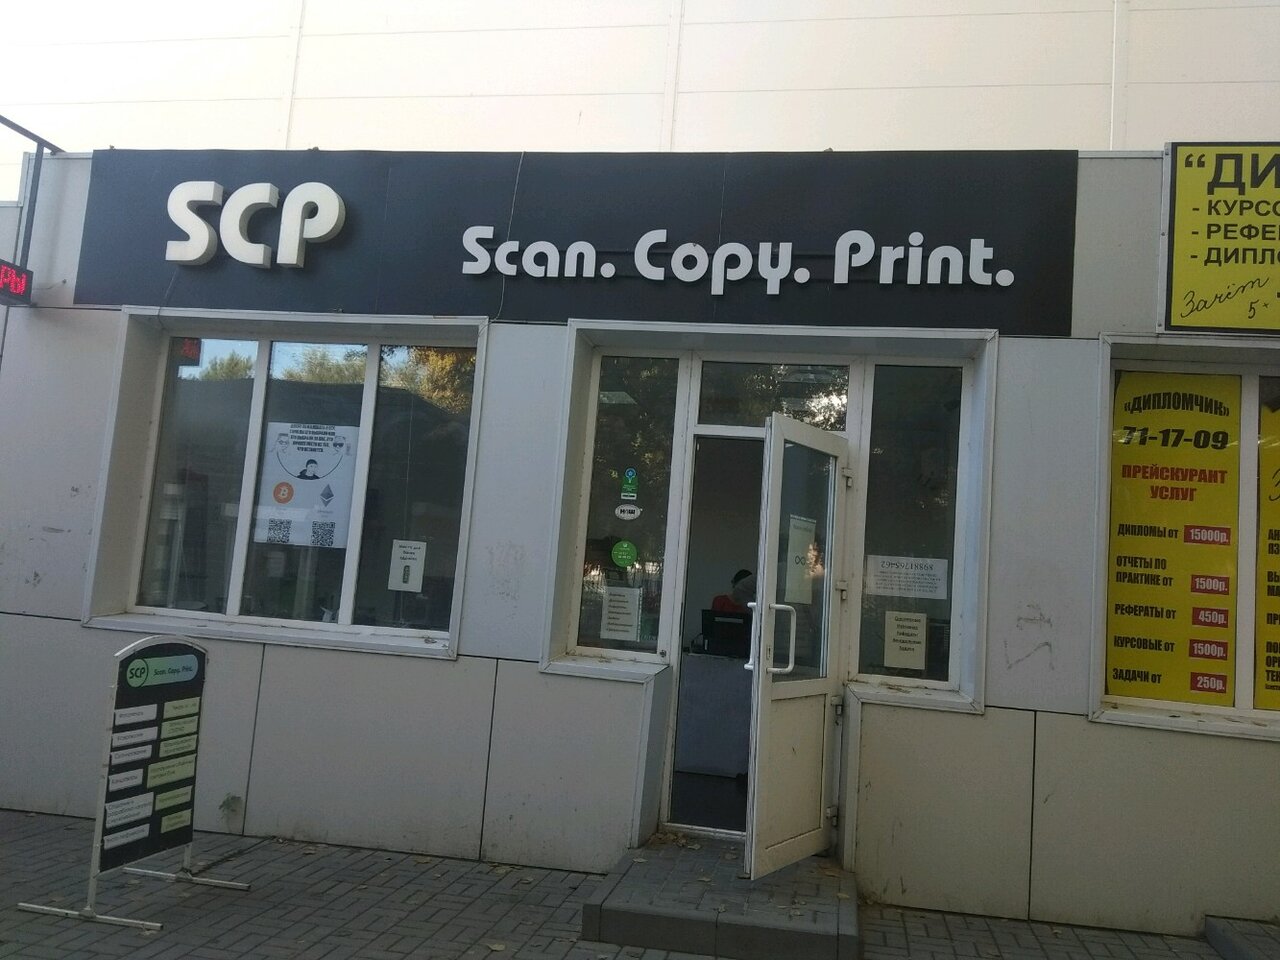 SCP scan copy print Blank Meme Template